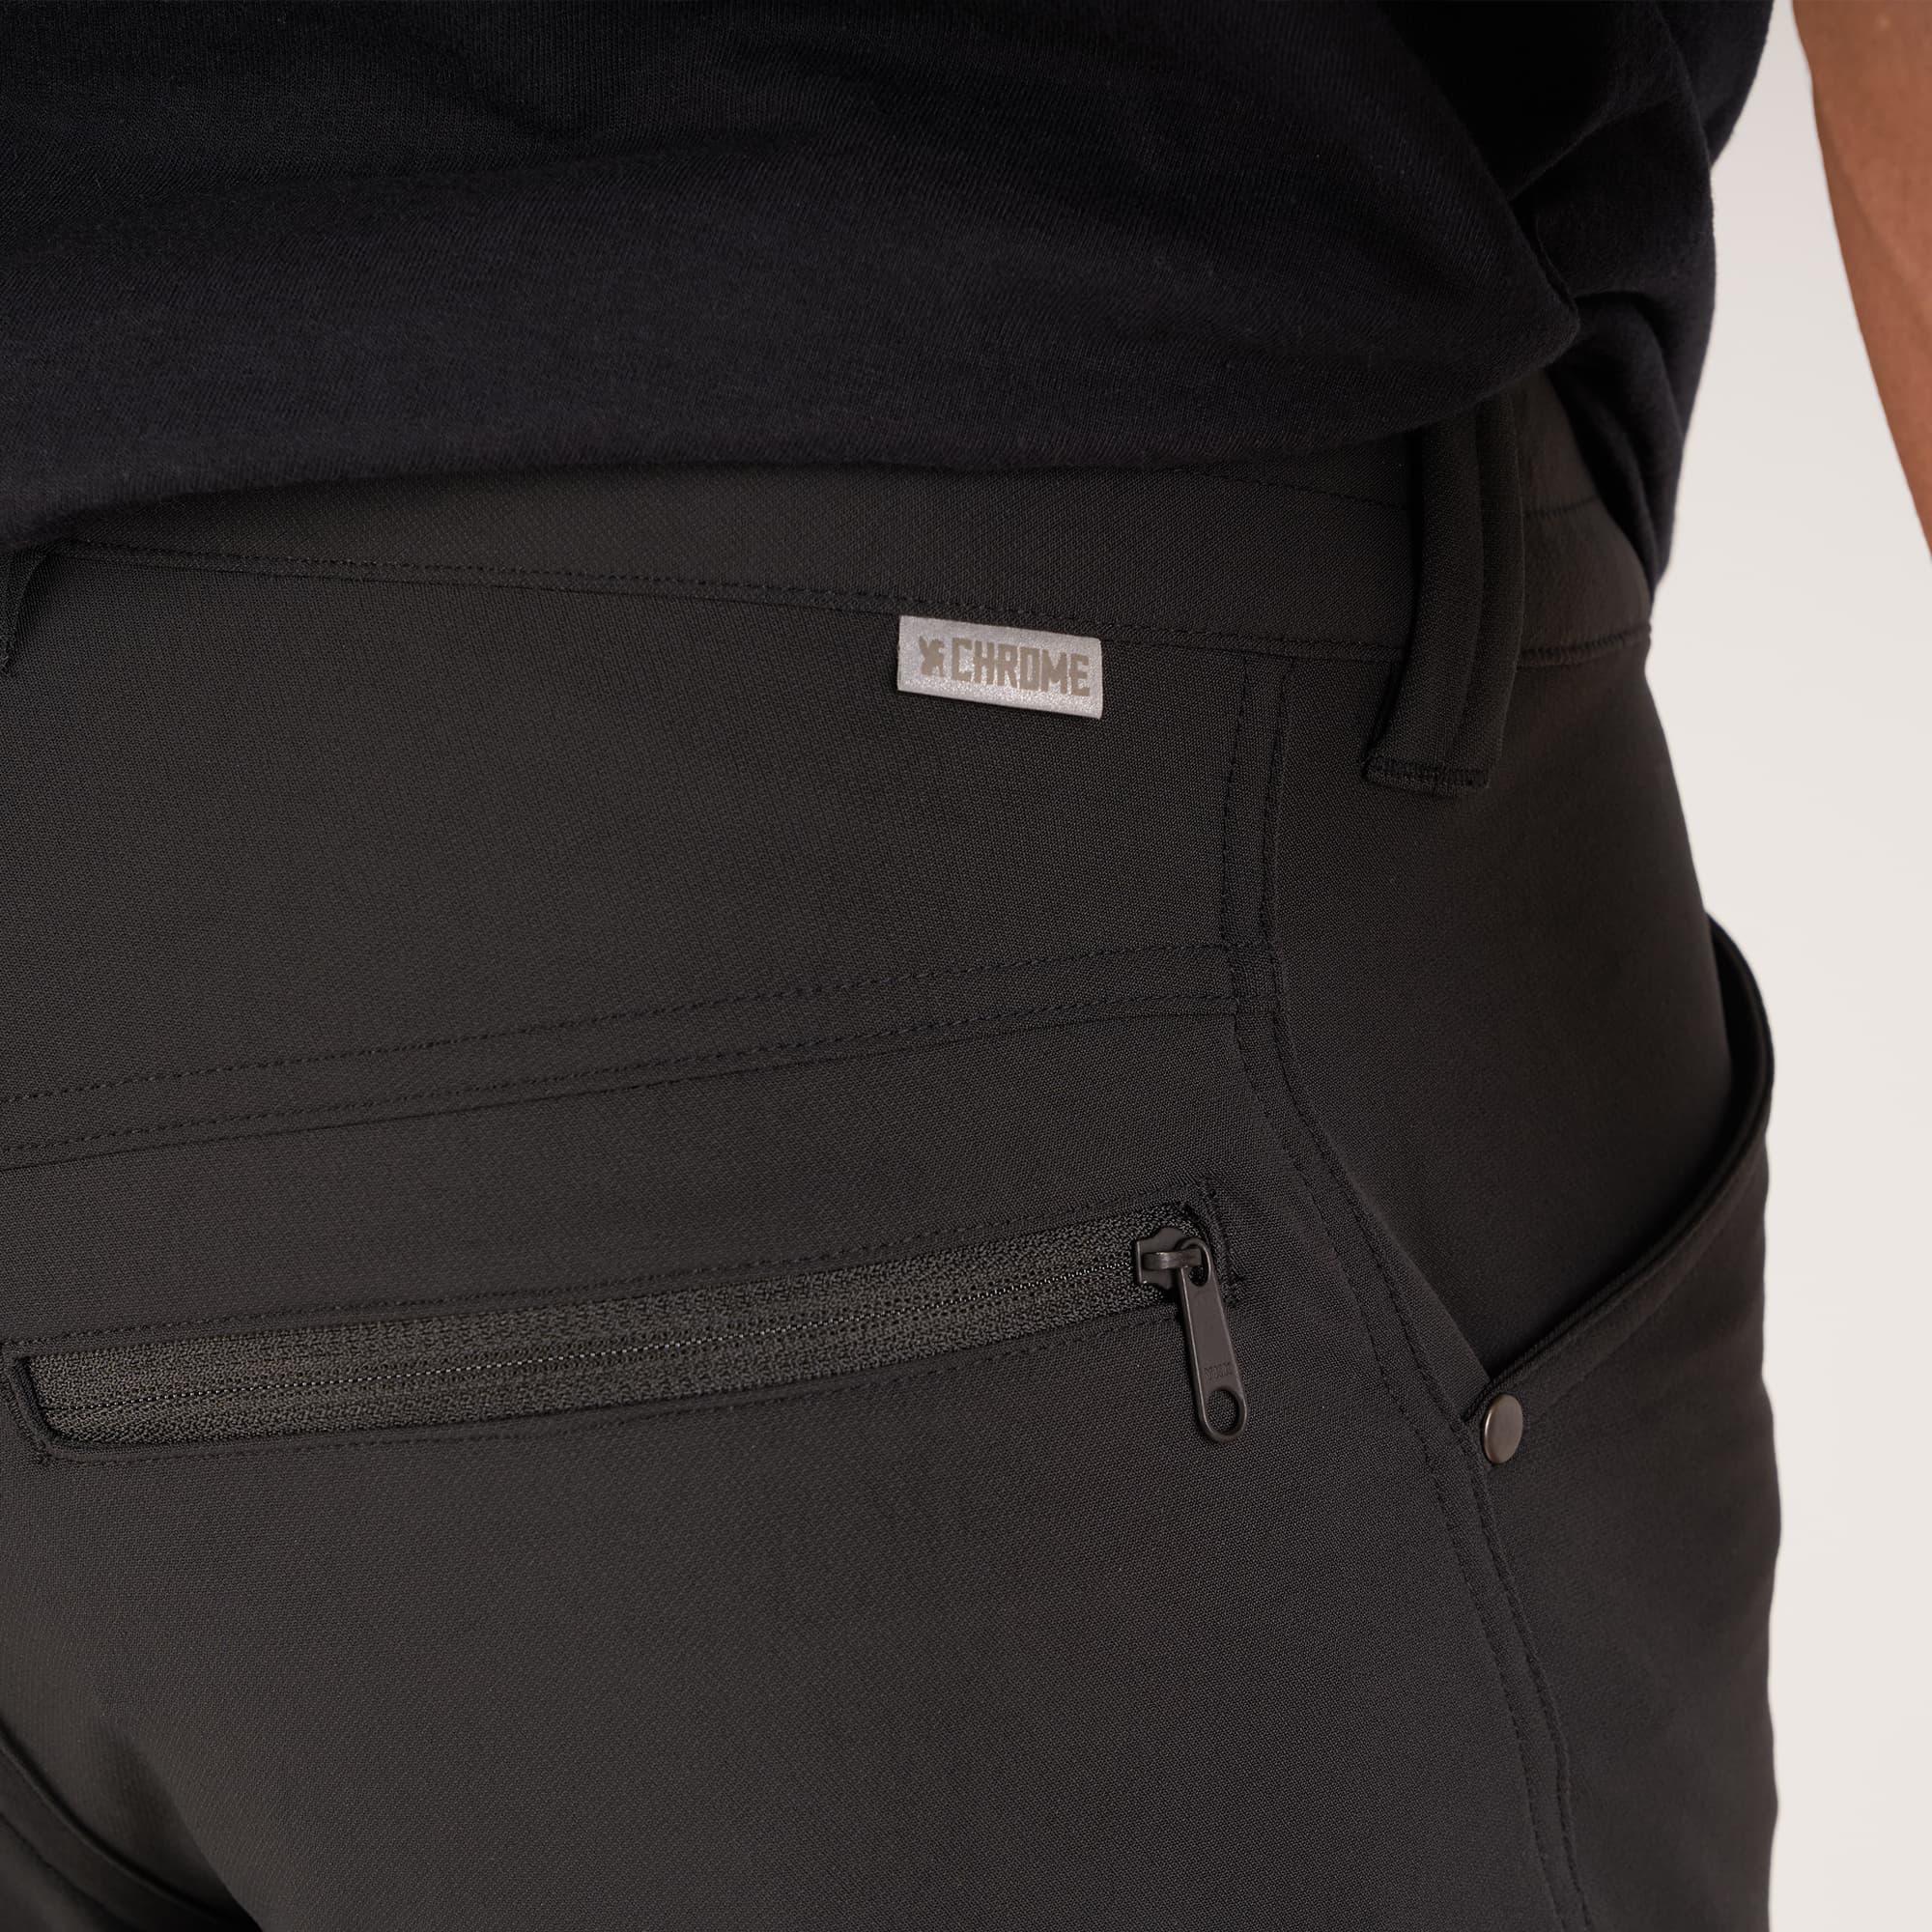 Men's Union Short 14" inseam in black back pocket view #color_black